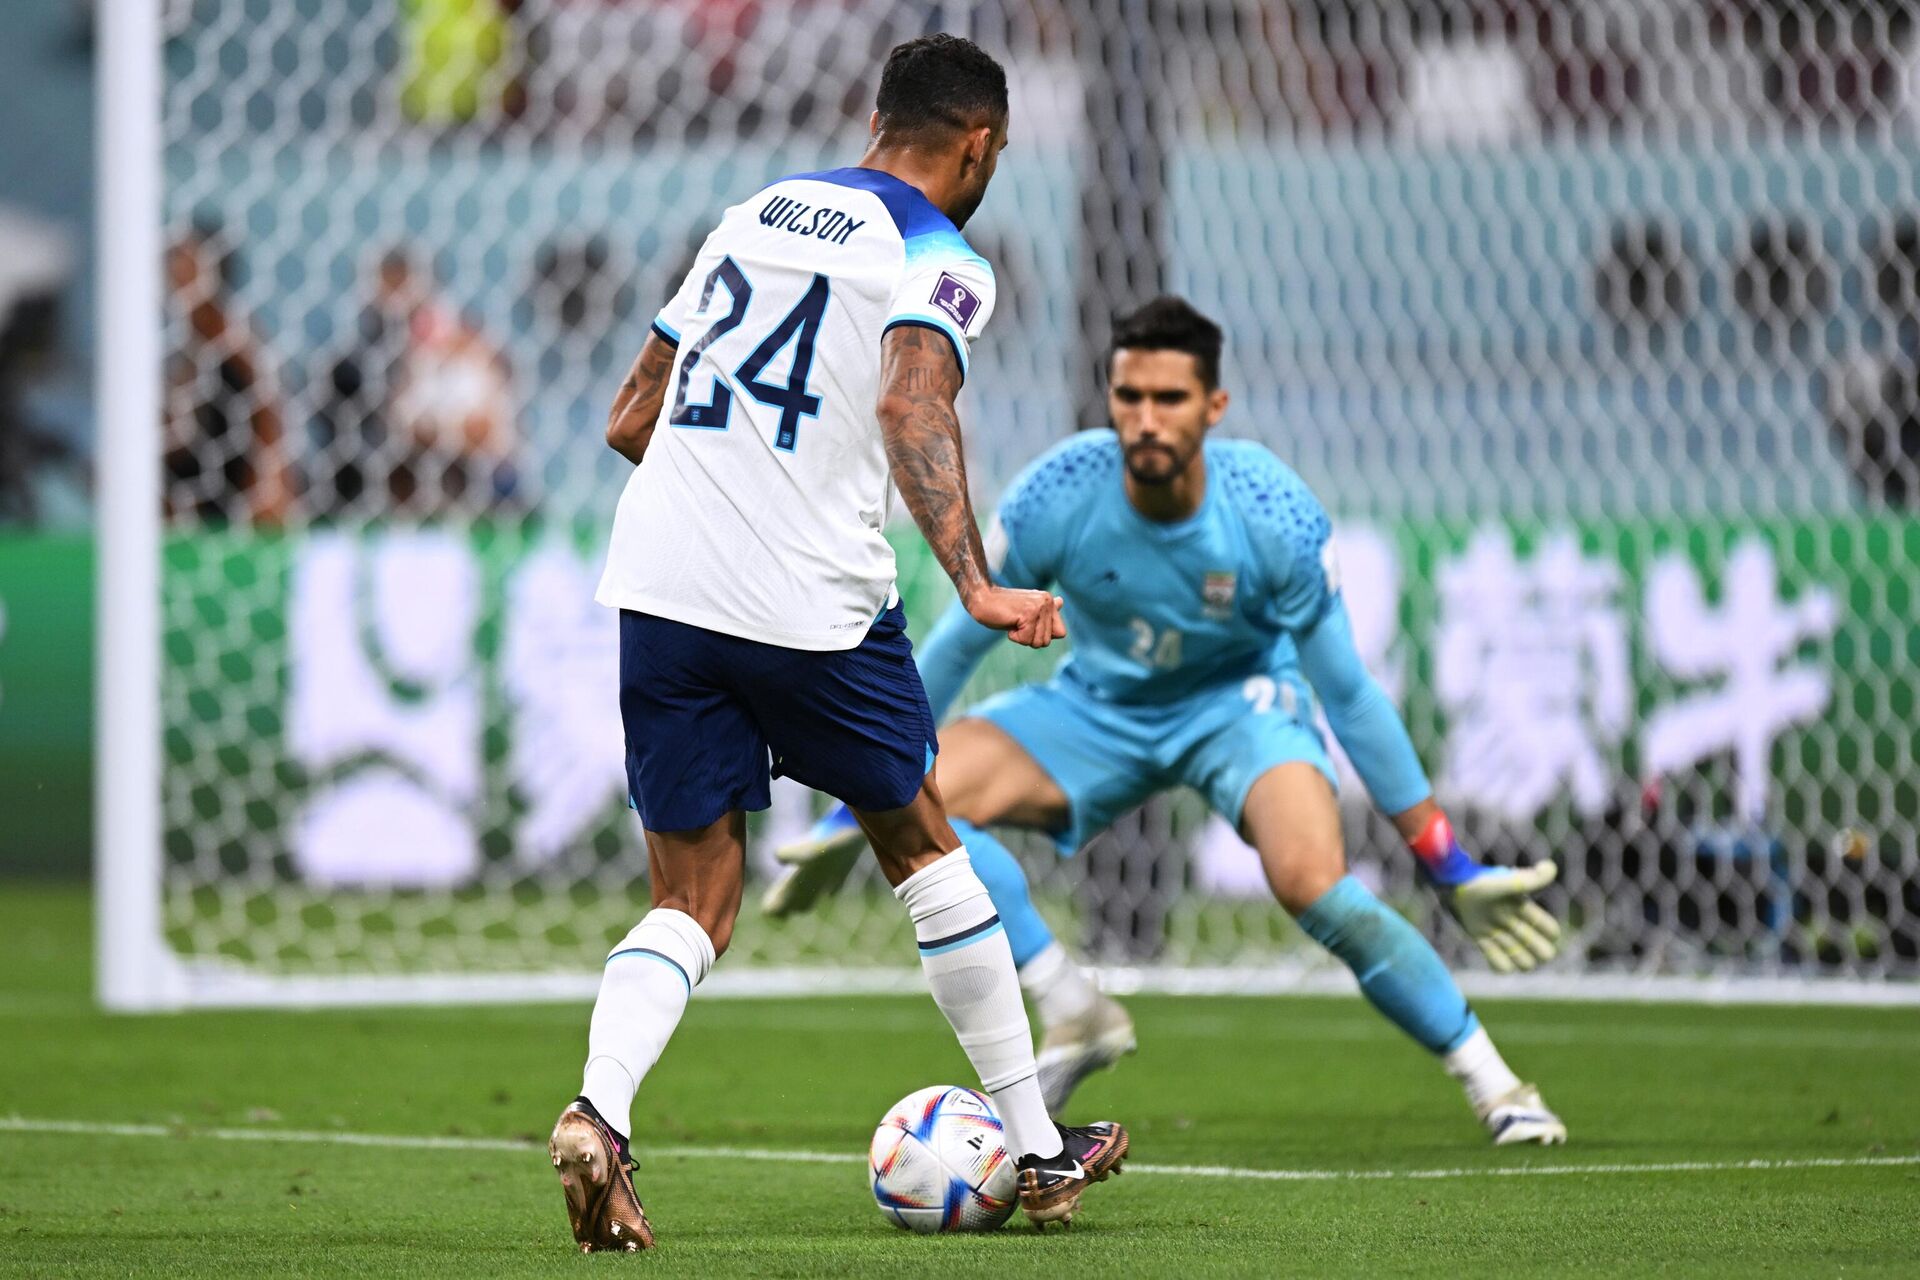 England's Callum Wilson tries to score during the Qatar 2022 World Cup Group B soccer match between England and Iran at the Khalifa International Stadium in Doha, Qatar. - Sputnik International, 1920, 22.11.2022